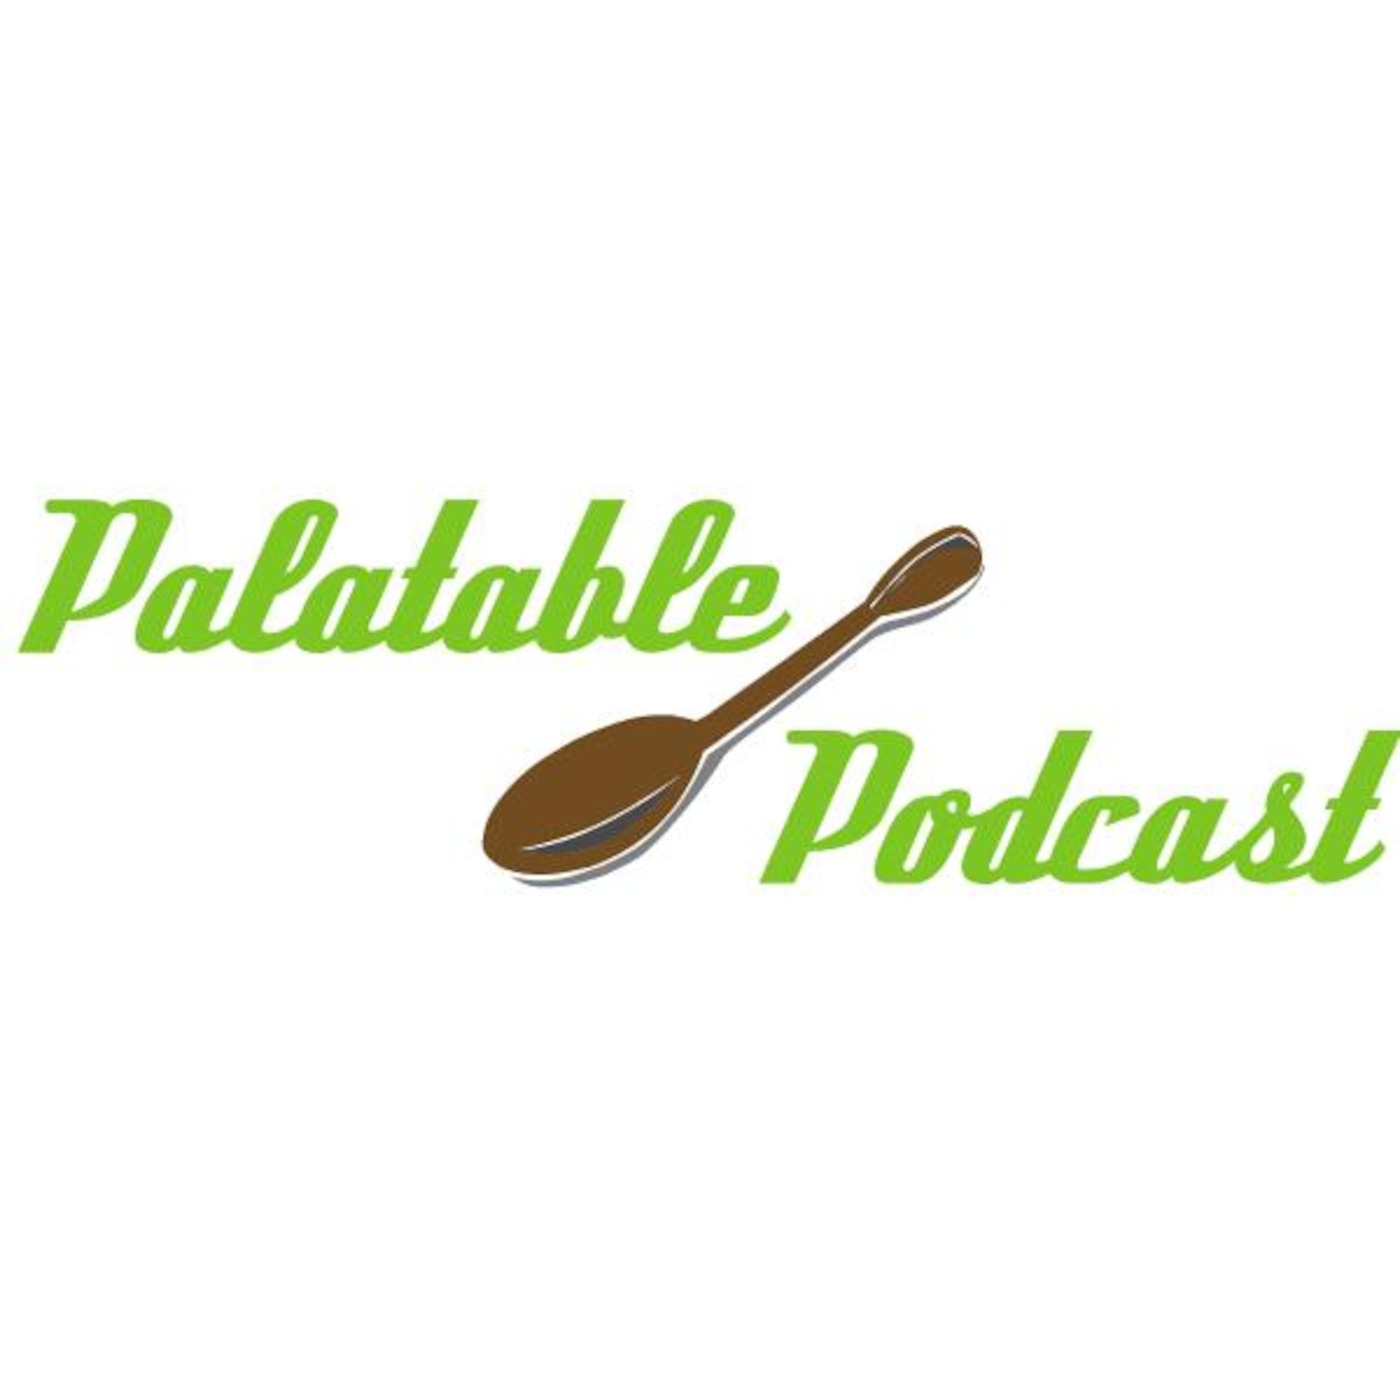 Palatable Podcast